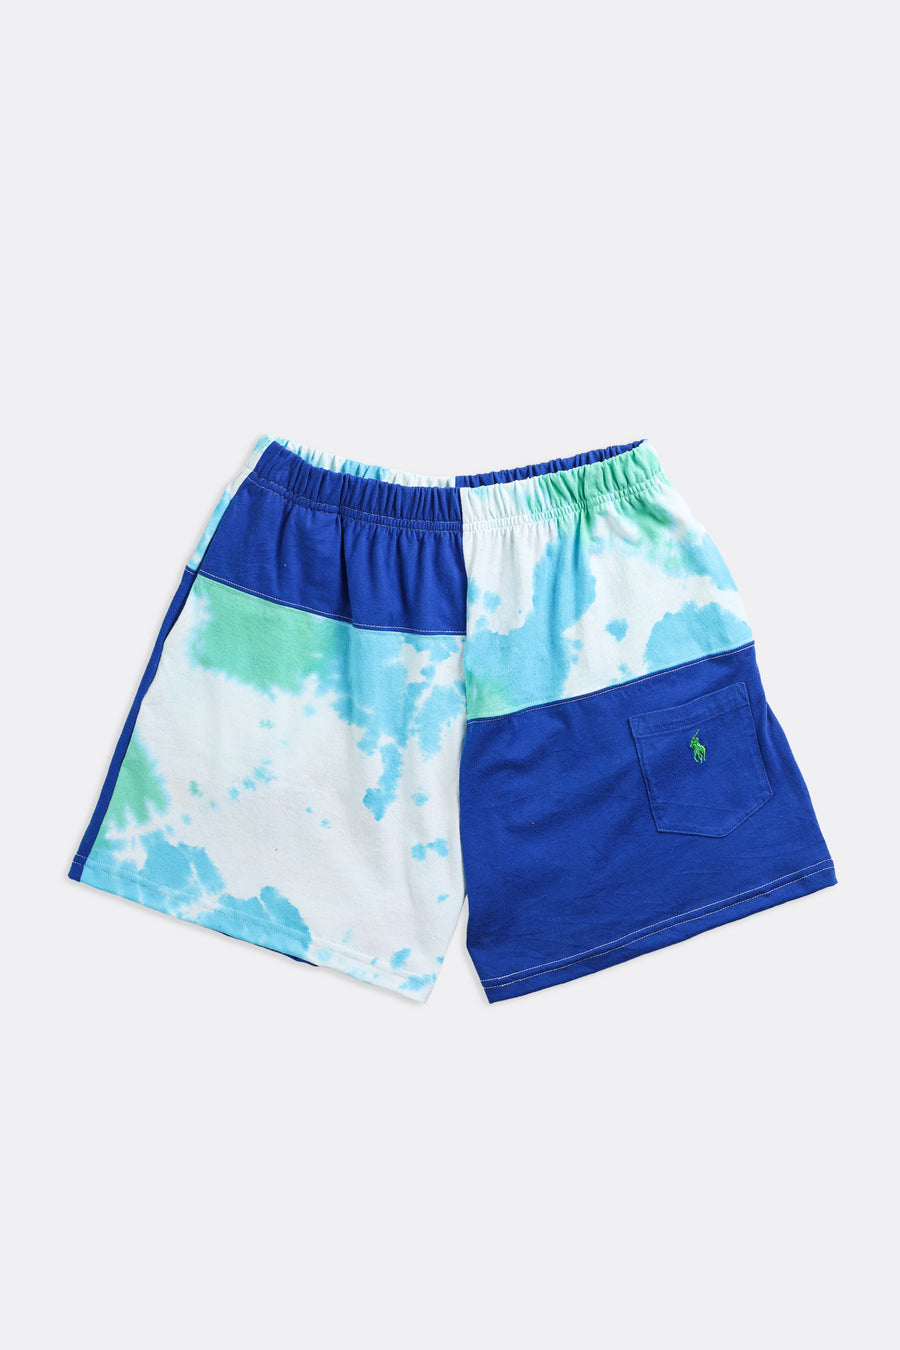 Unisex Rework Polo Patchwork Tee Shorts - Women's M, Men's S